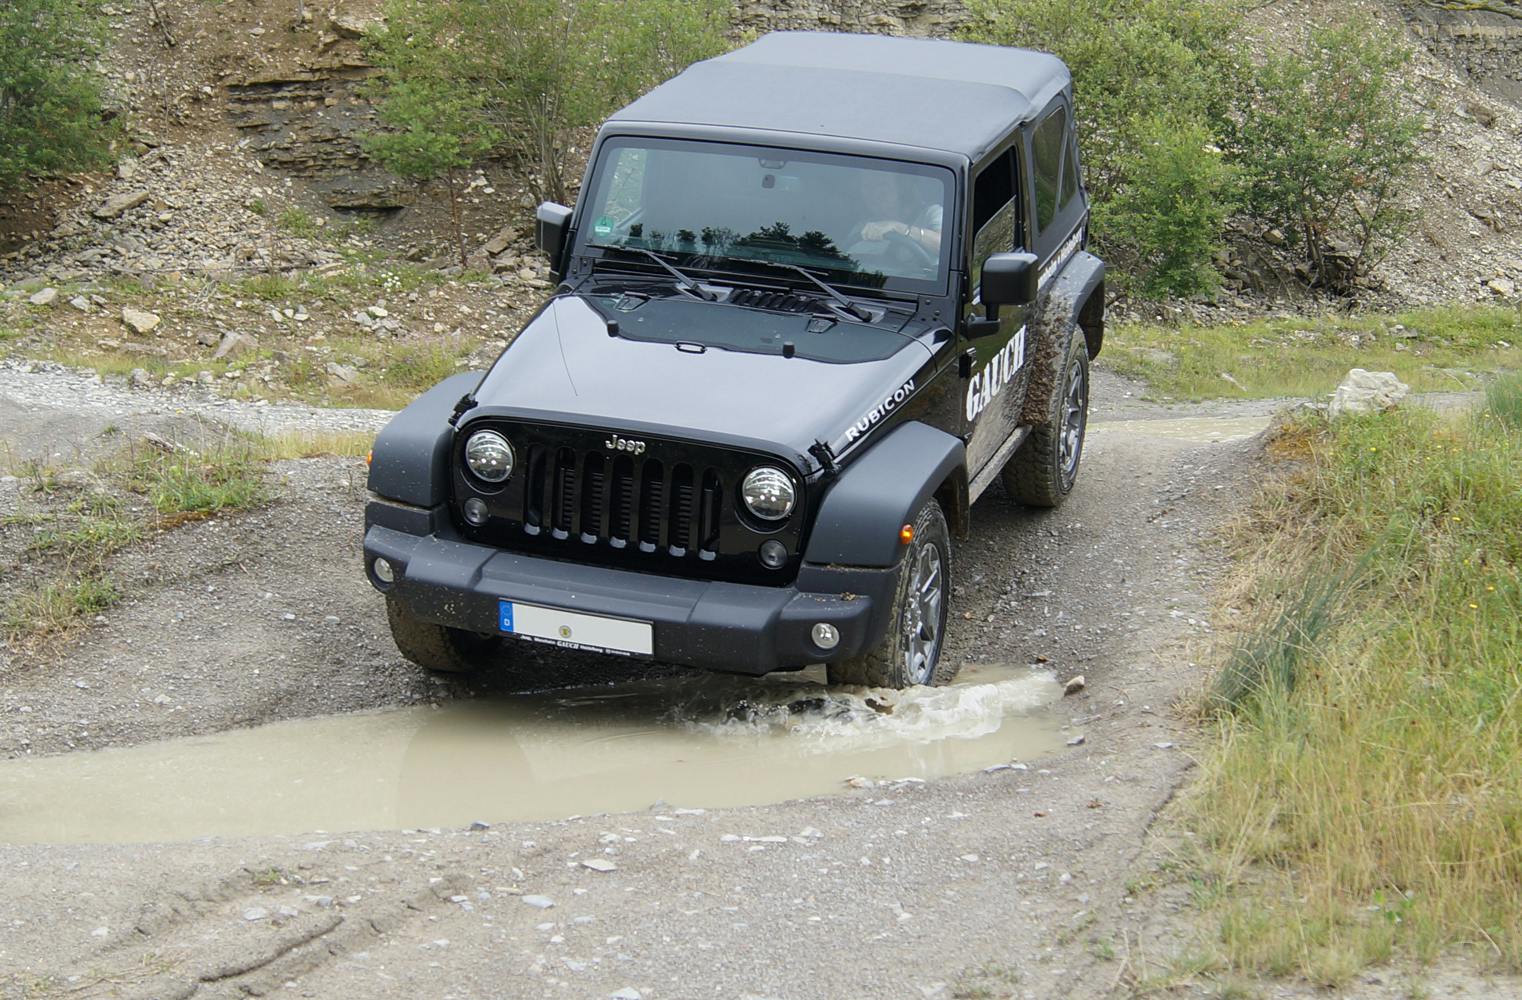 Jeep Wrangler Rubicon fahren | Offroad-Action mit Allrad